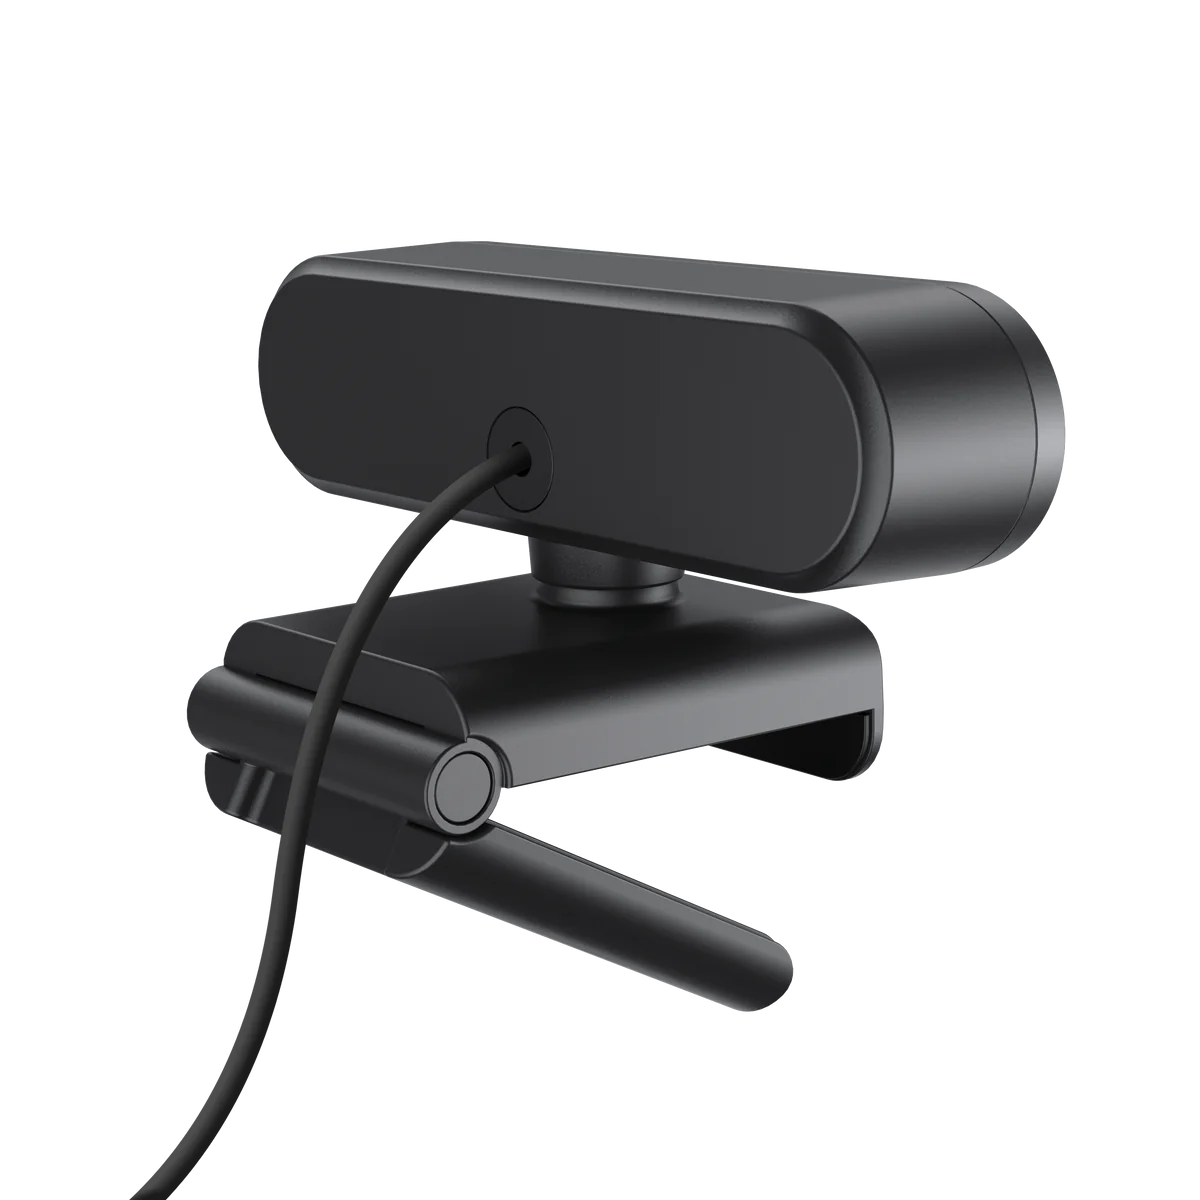 EMEET SmartCam C960 4K UHD Autofocus 4K Webcam with Dual Mic